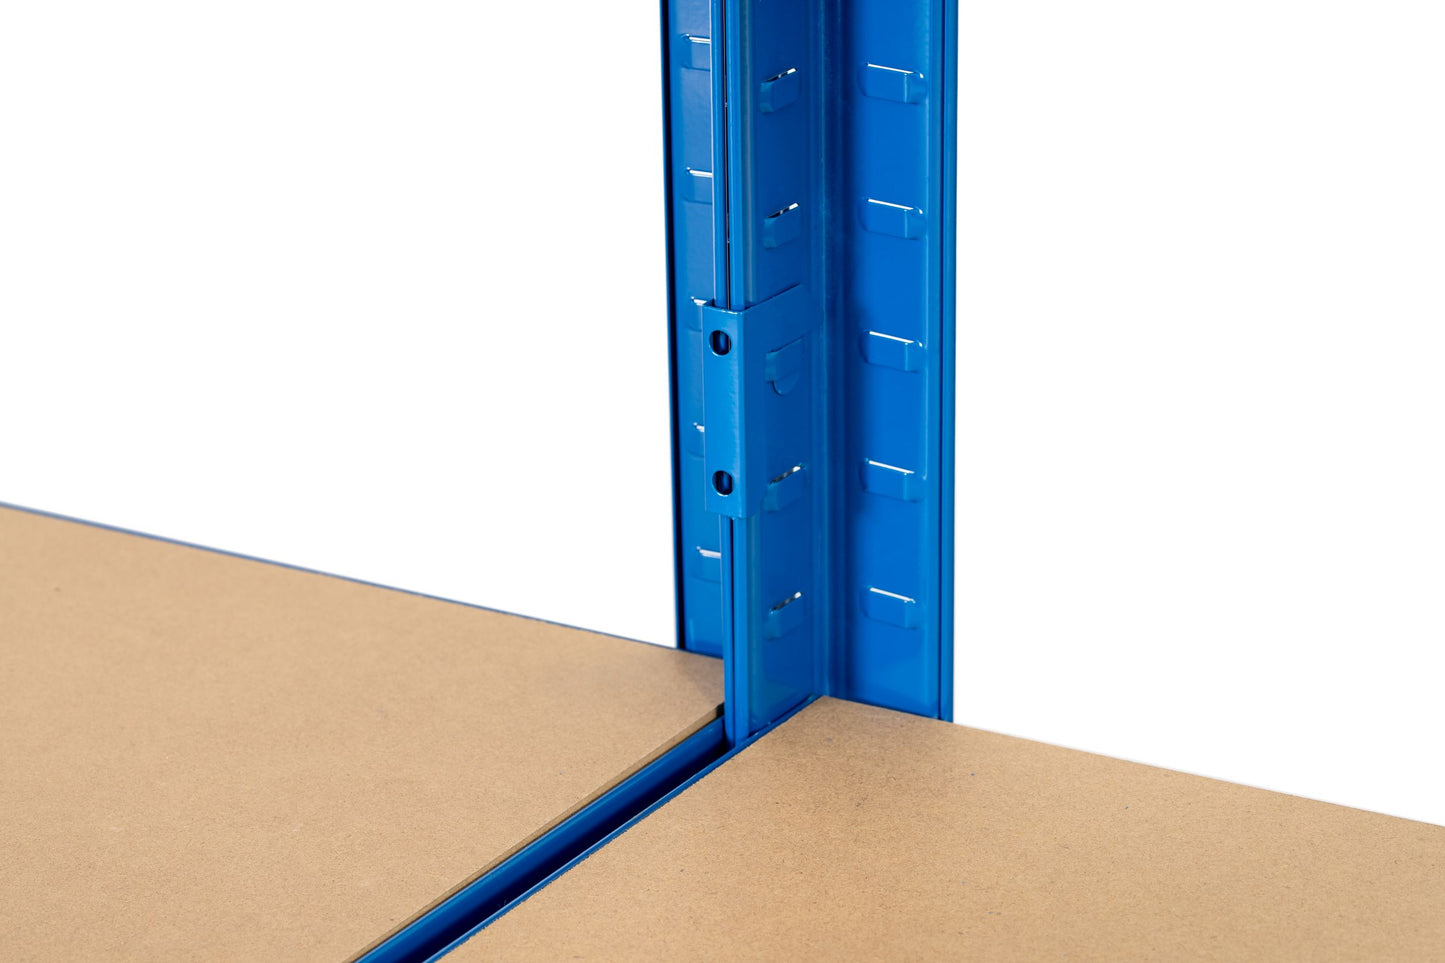 180 x 90 x 45cm | Blue | 5 Tier Boltless Heavy Duty Garage Shelving Unit | 1000kg Load Weight